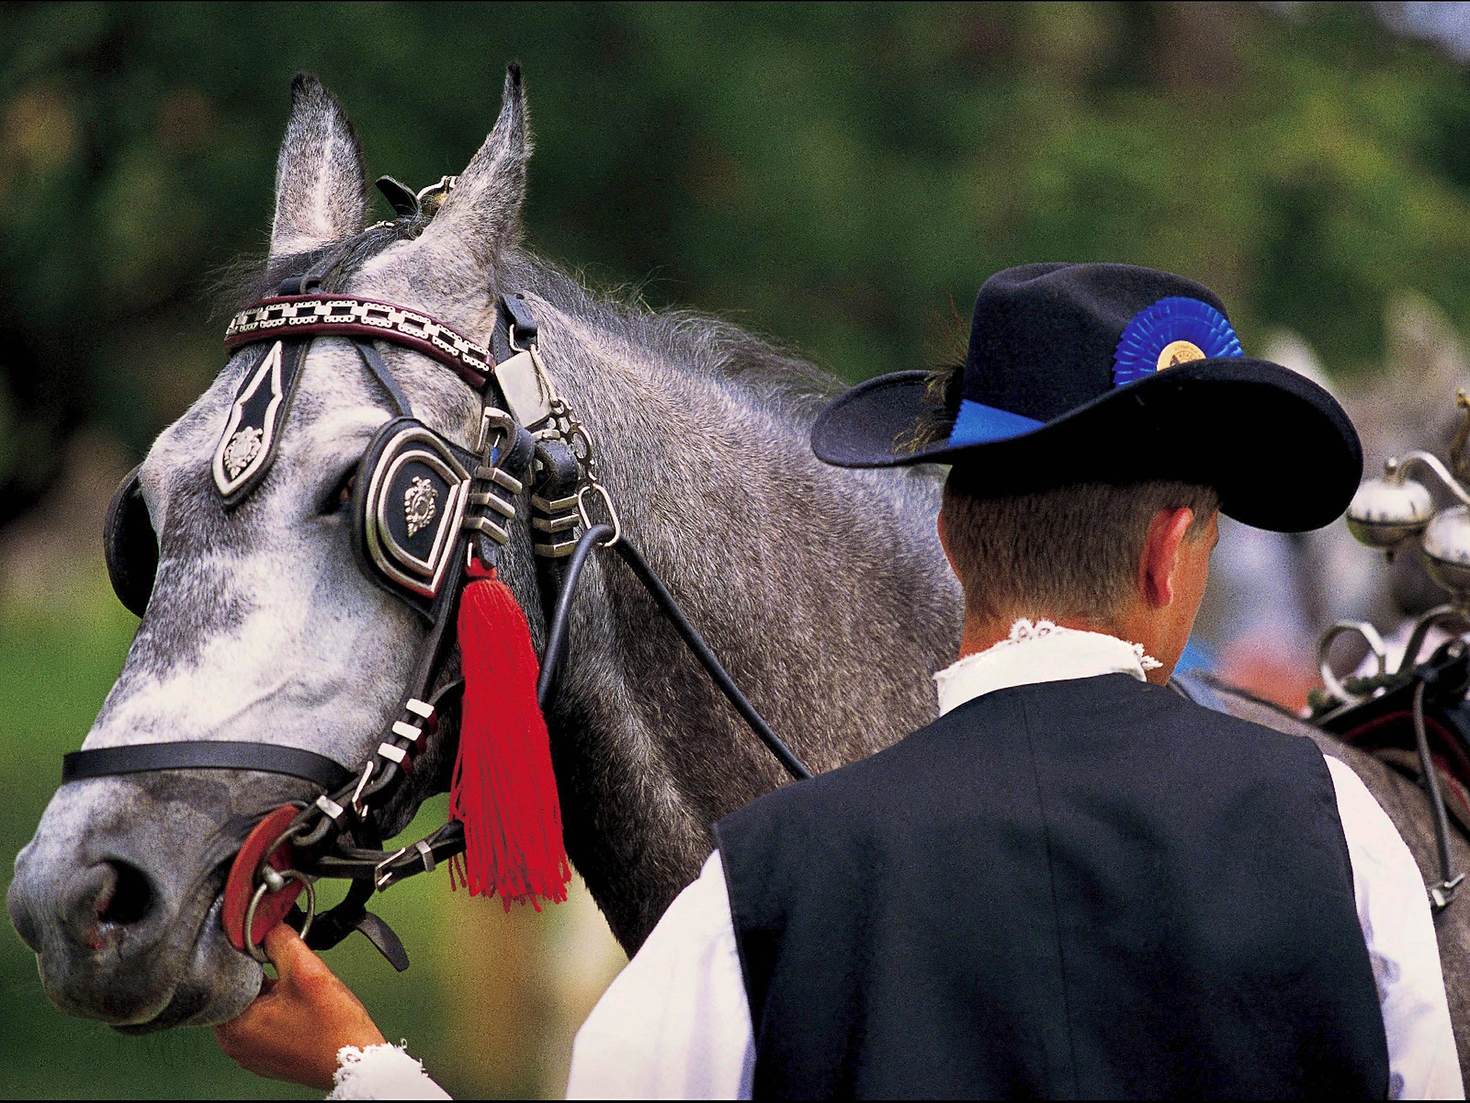 horse-riding-vojvodina-serbia_cs-fa609e94fb7a